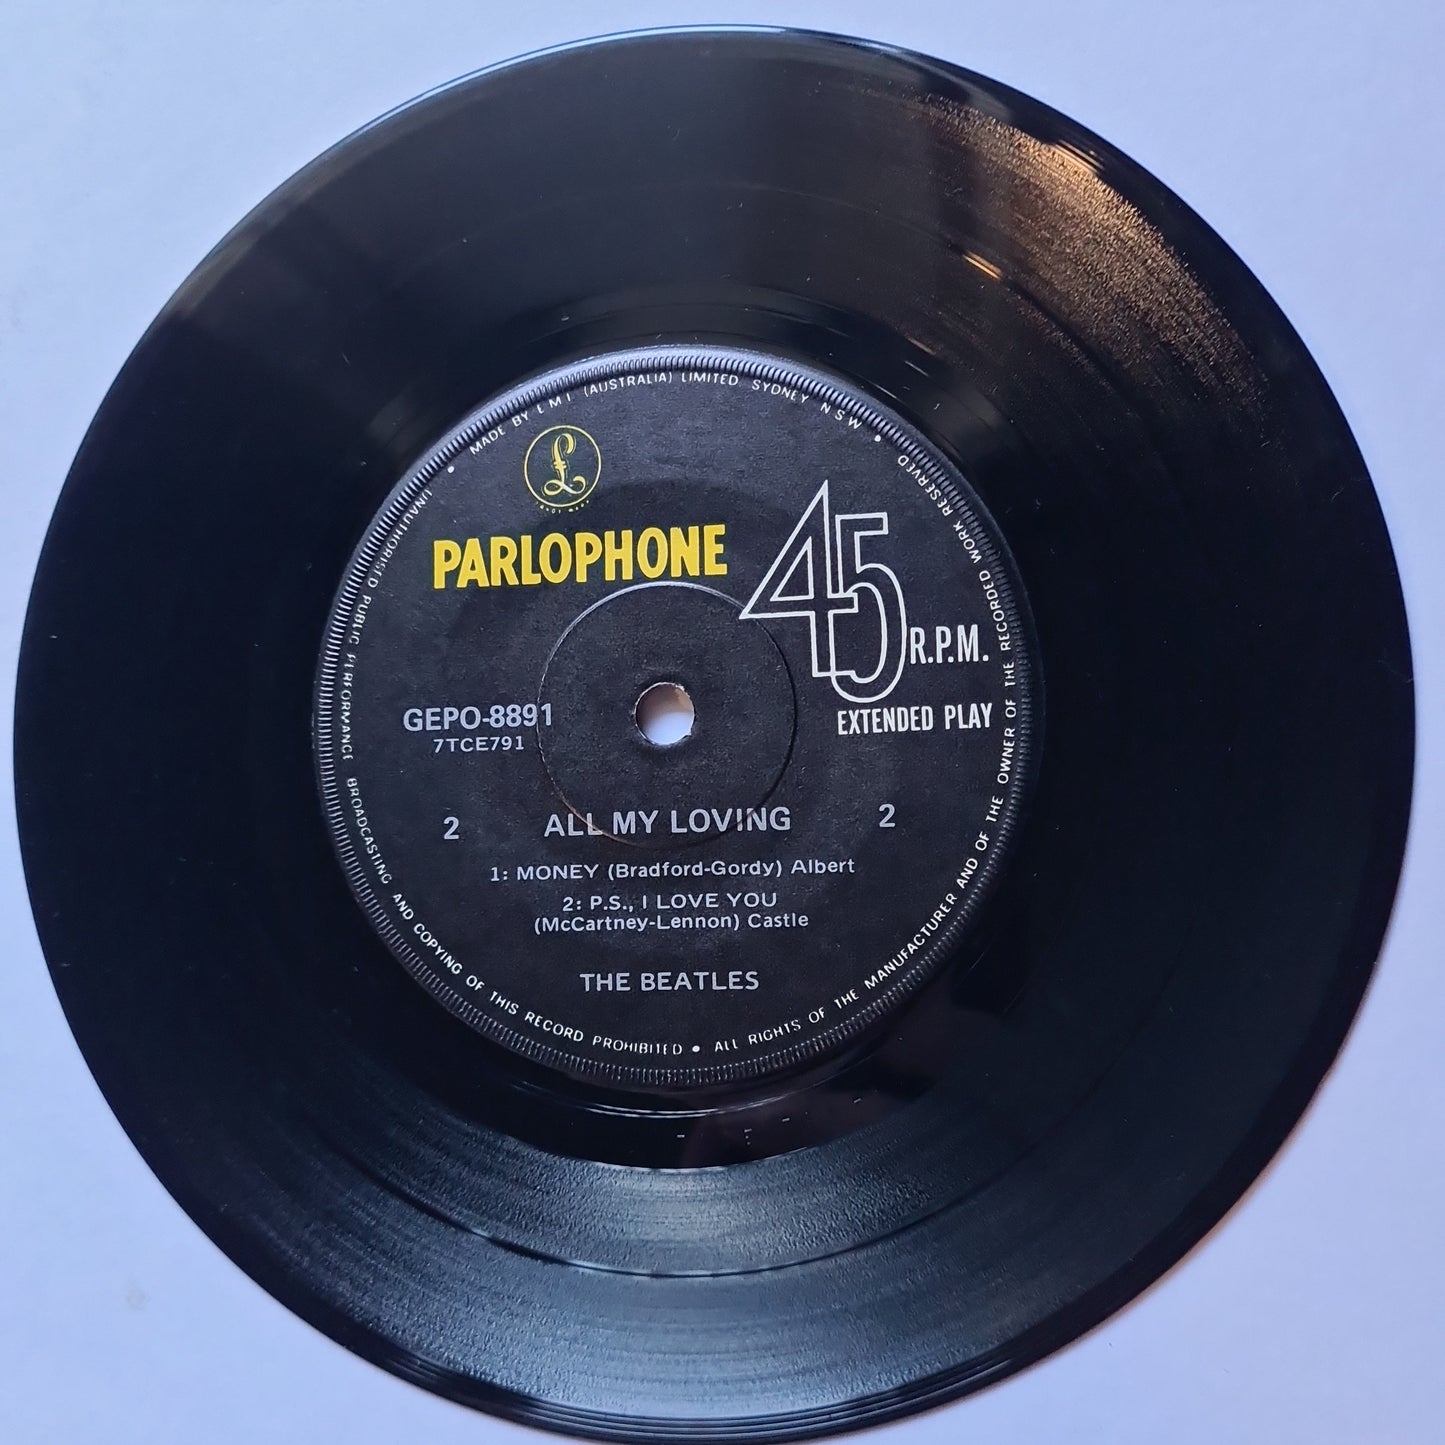 The Beatles – All My Loving - 1964 (1964 Australian 7inch single) - Vinyl Record